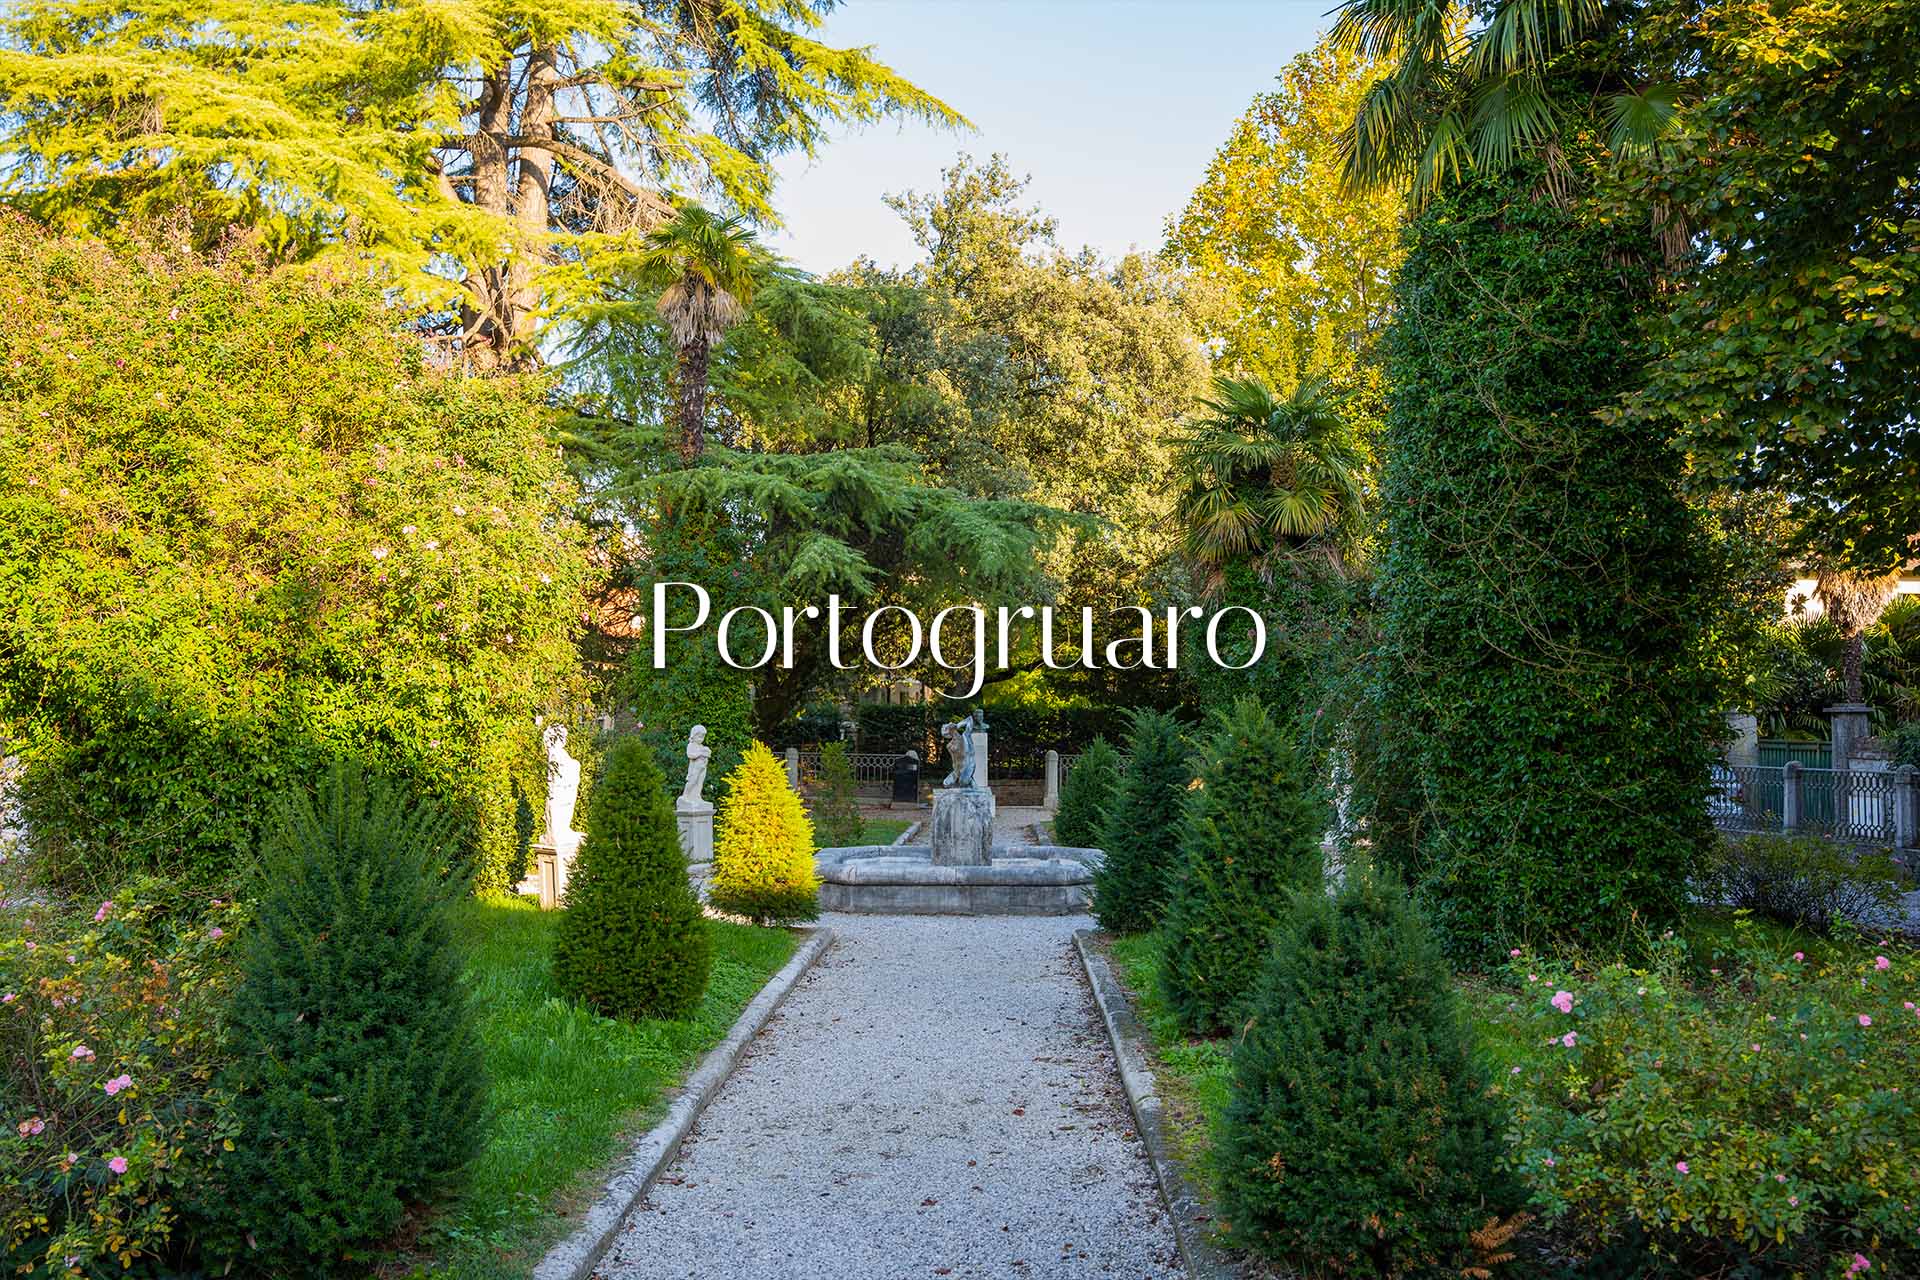 Portogruaro and its surroundings